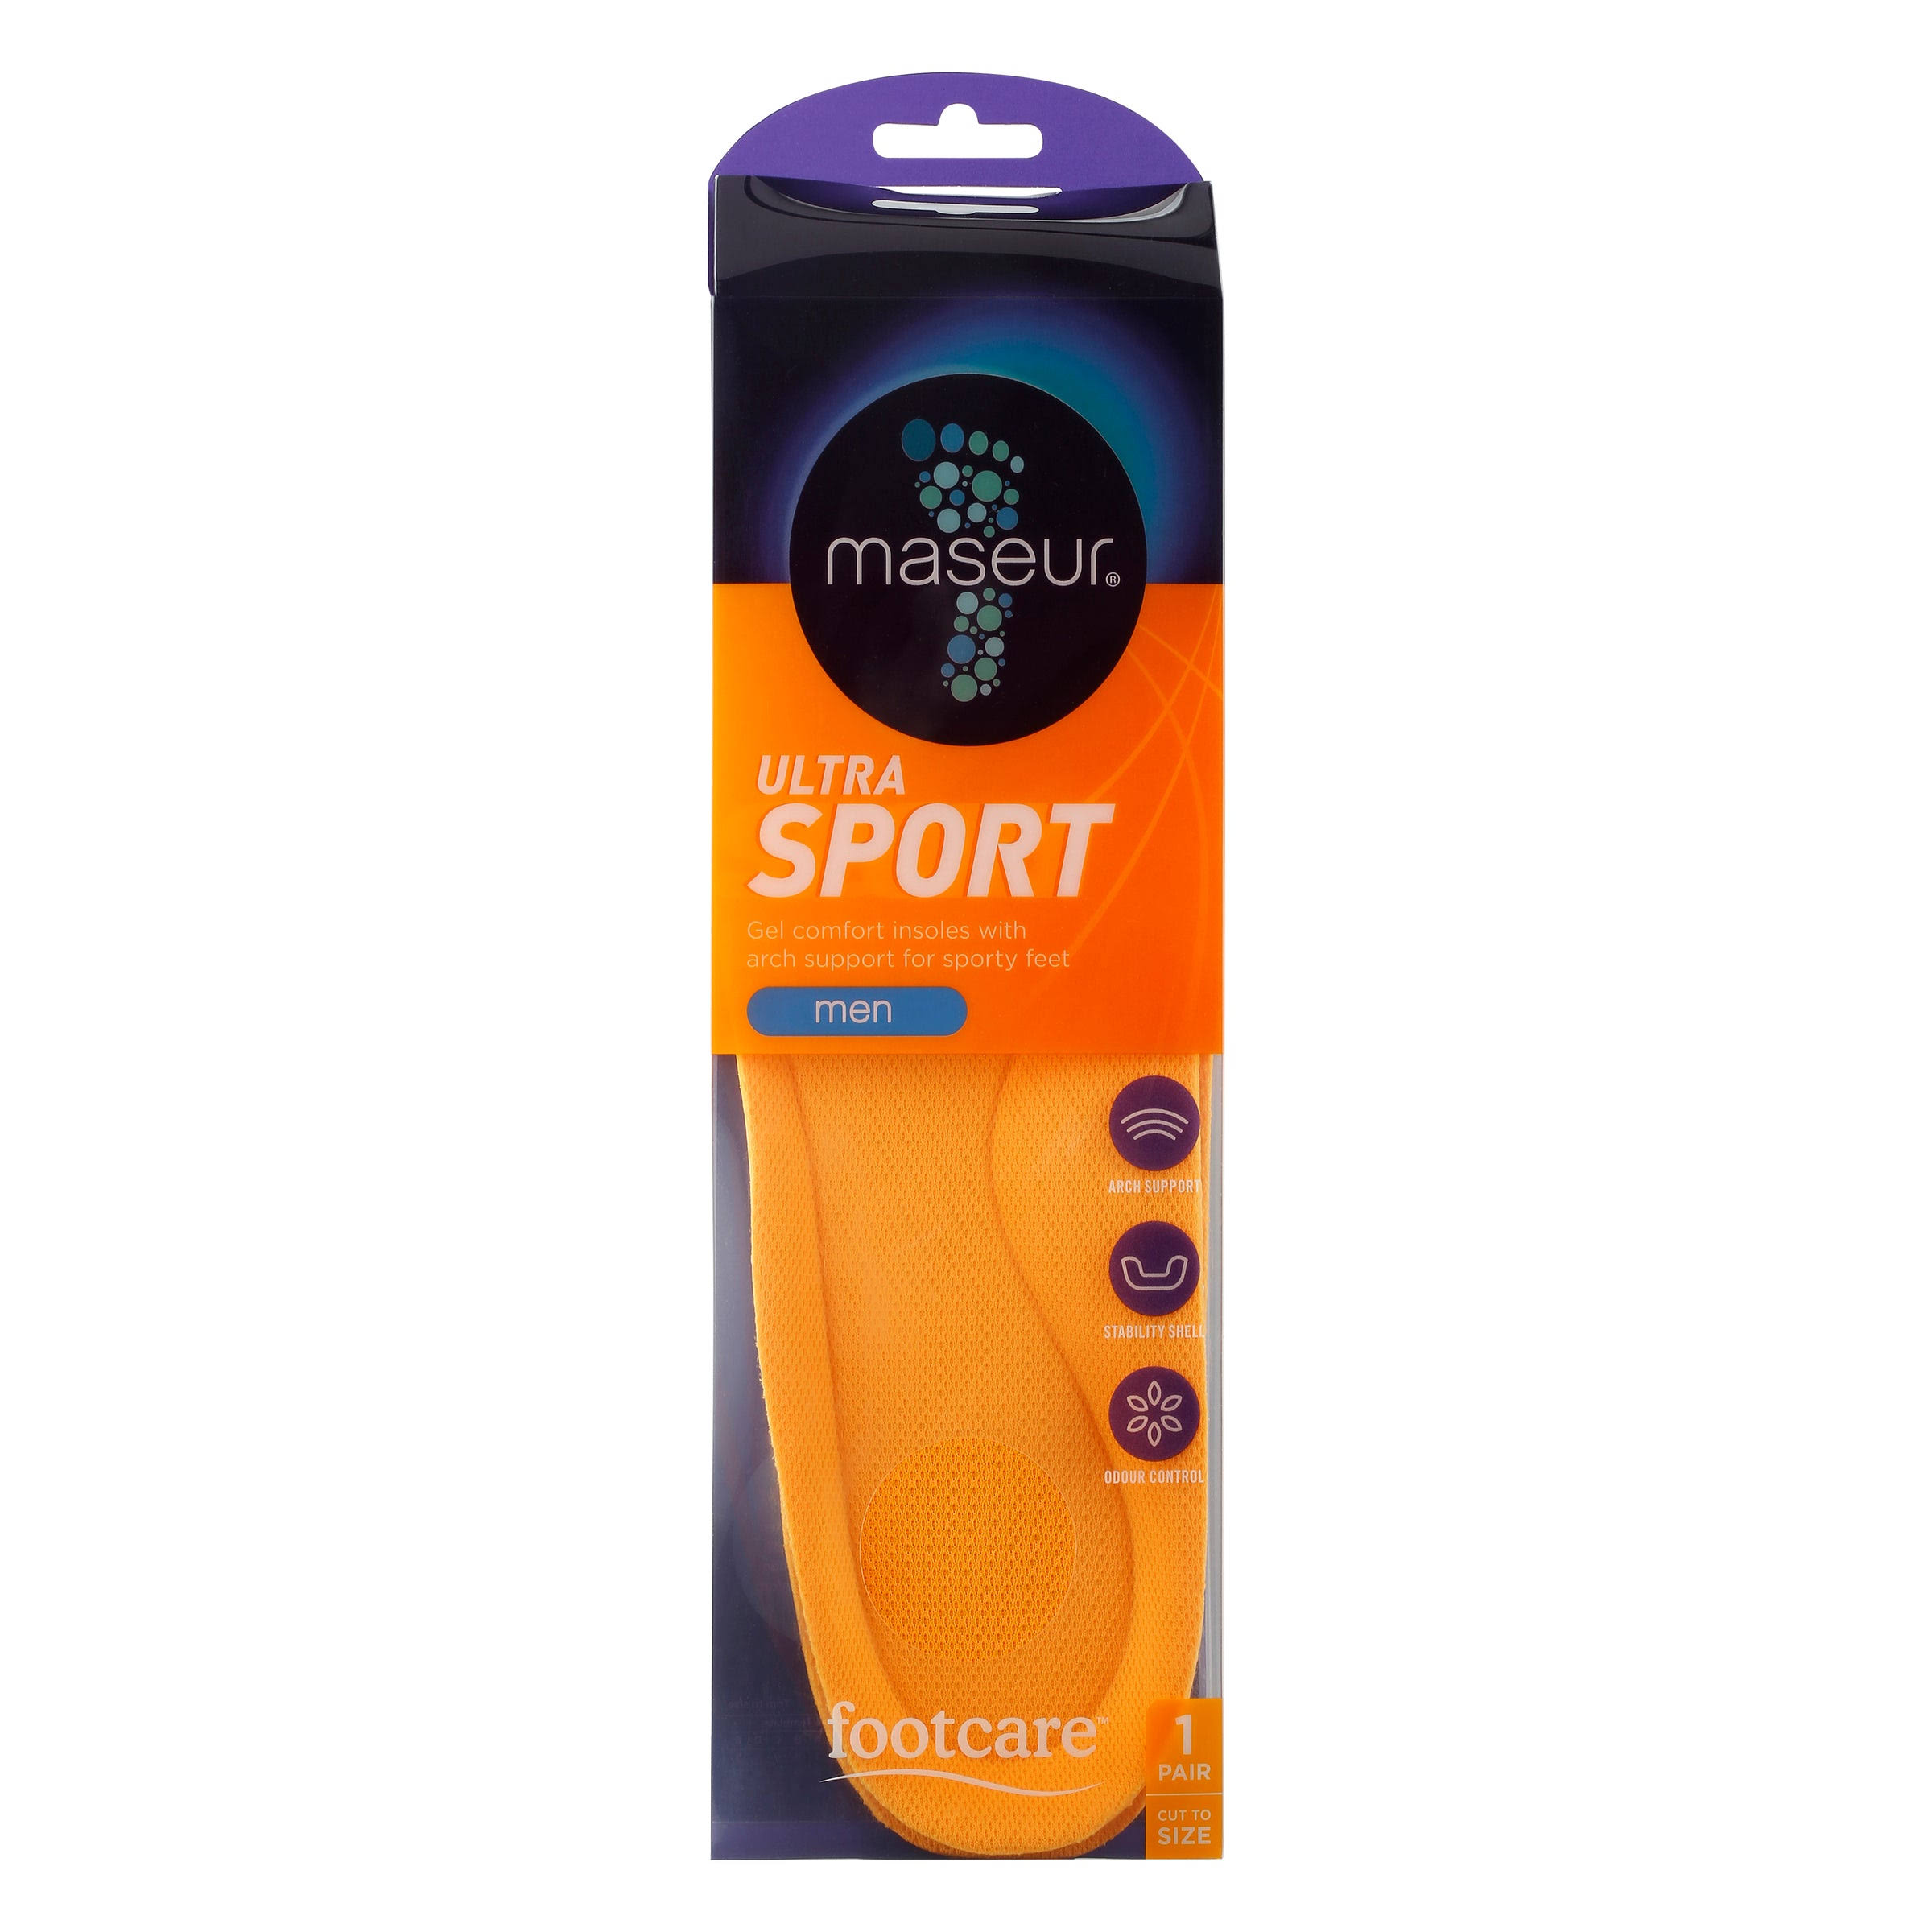 Footcare Ultra Sport Insoles - Men